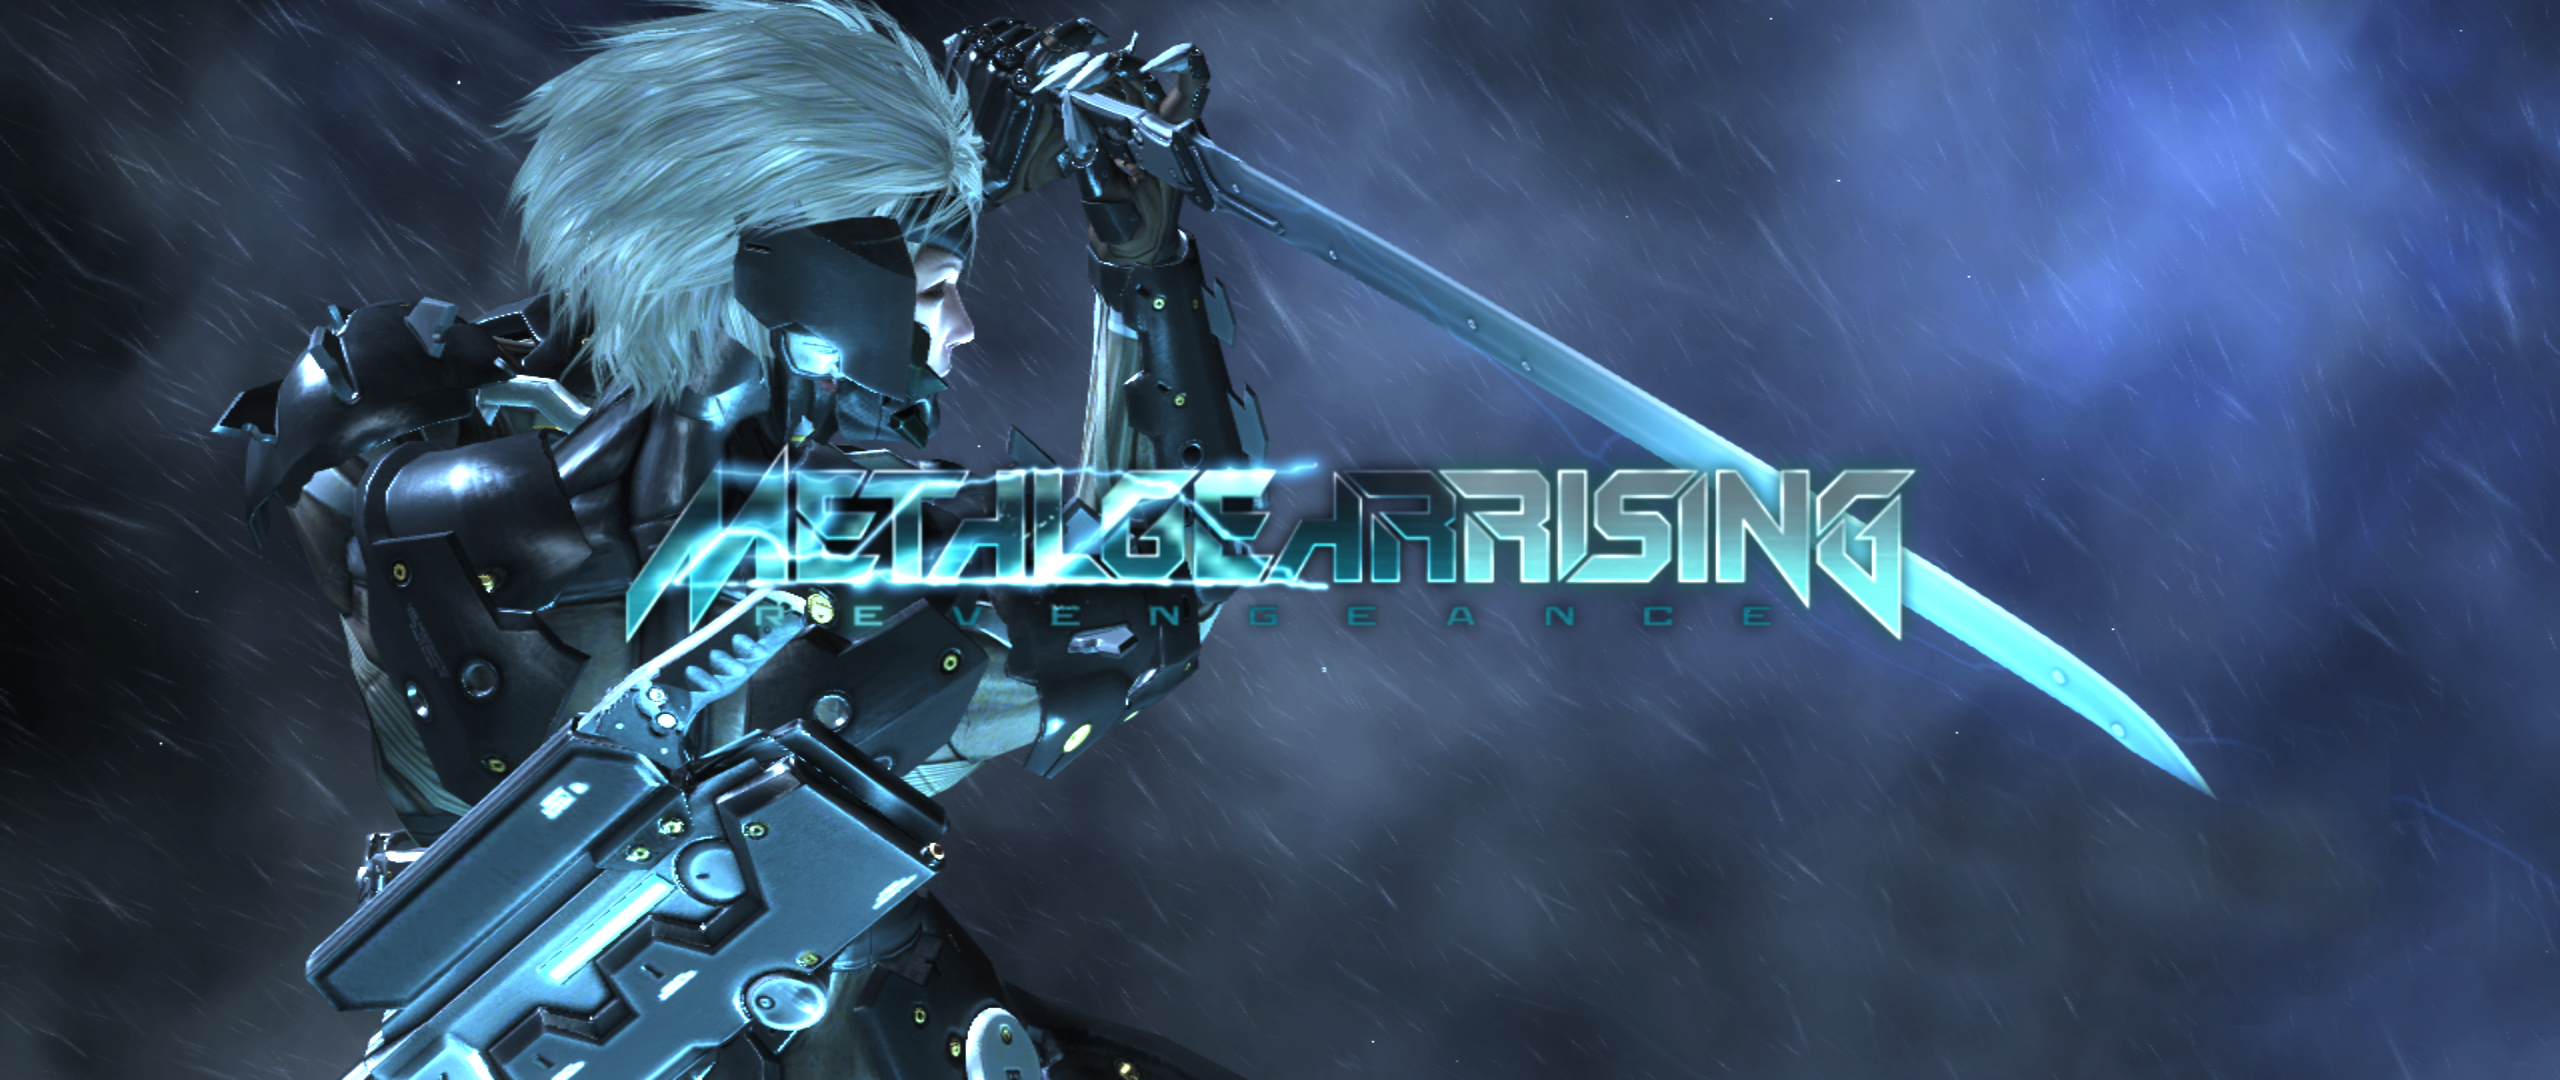 Metal Gear Rising: Revengeance [2560x1080]